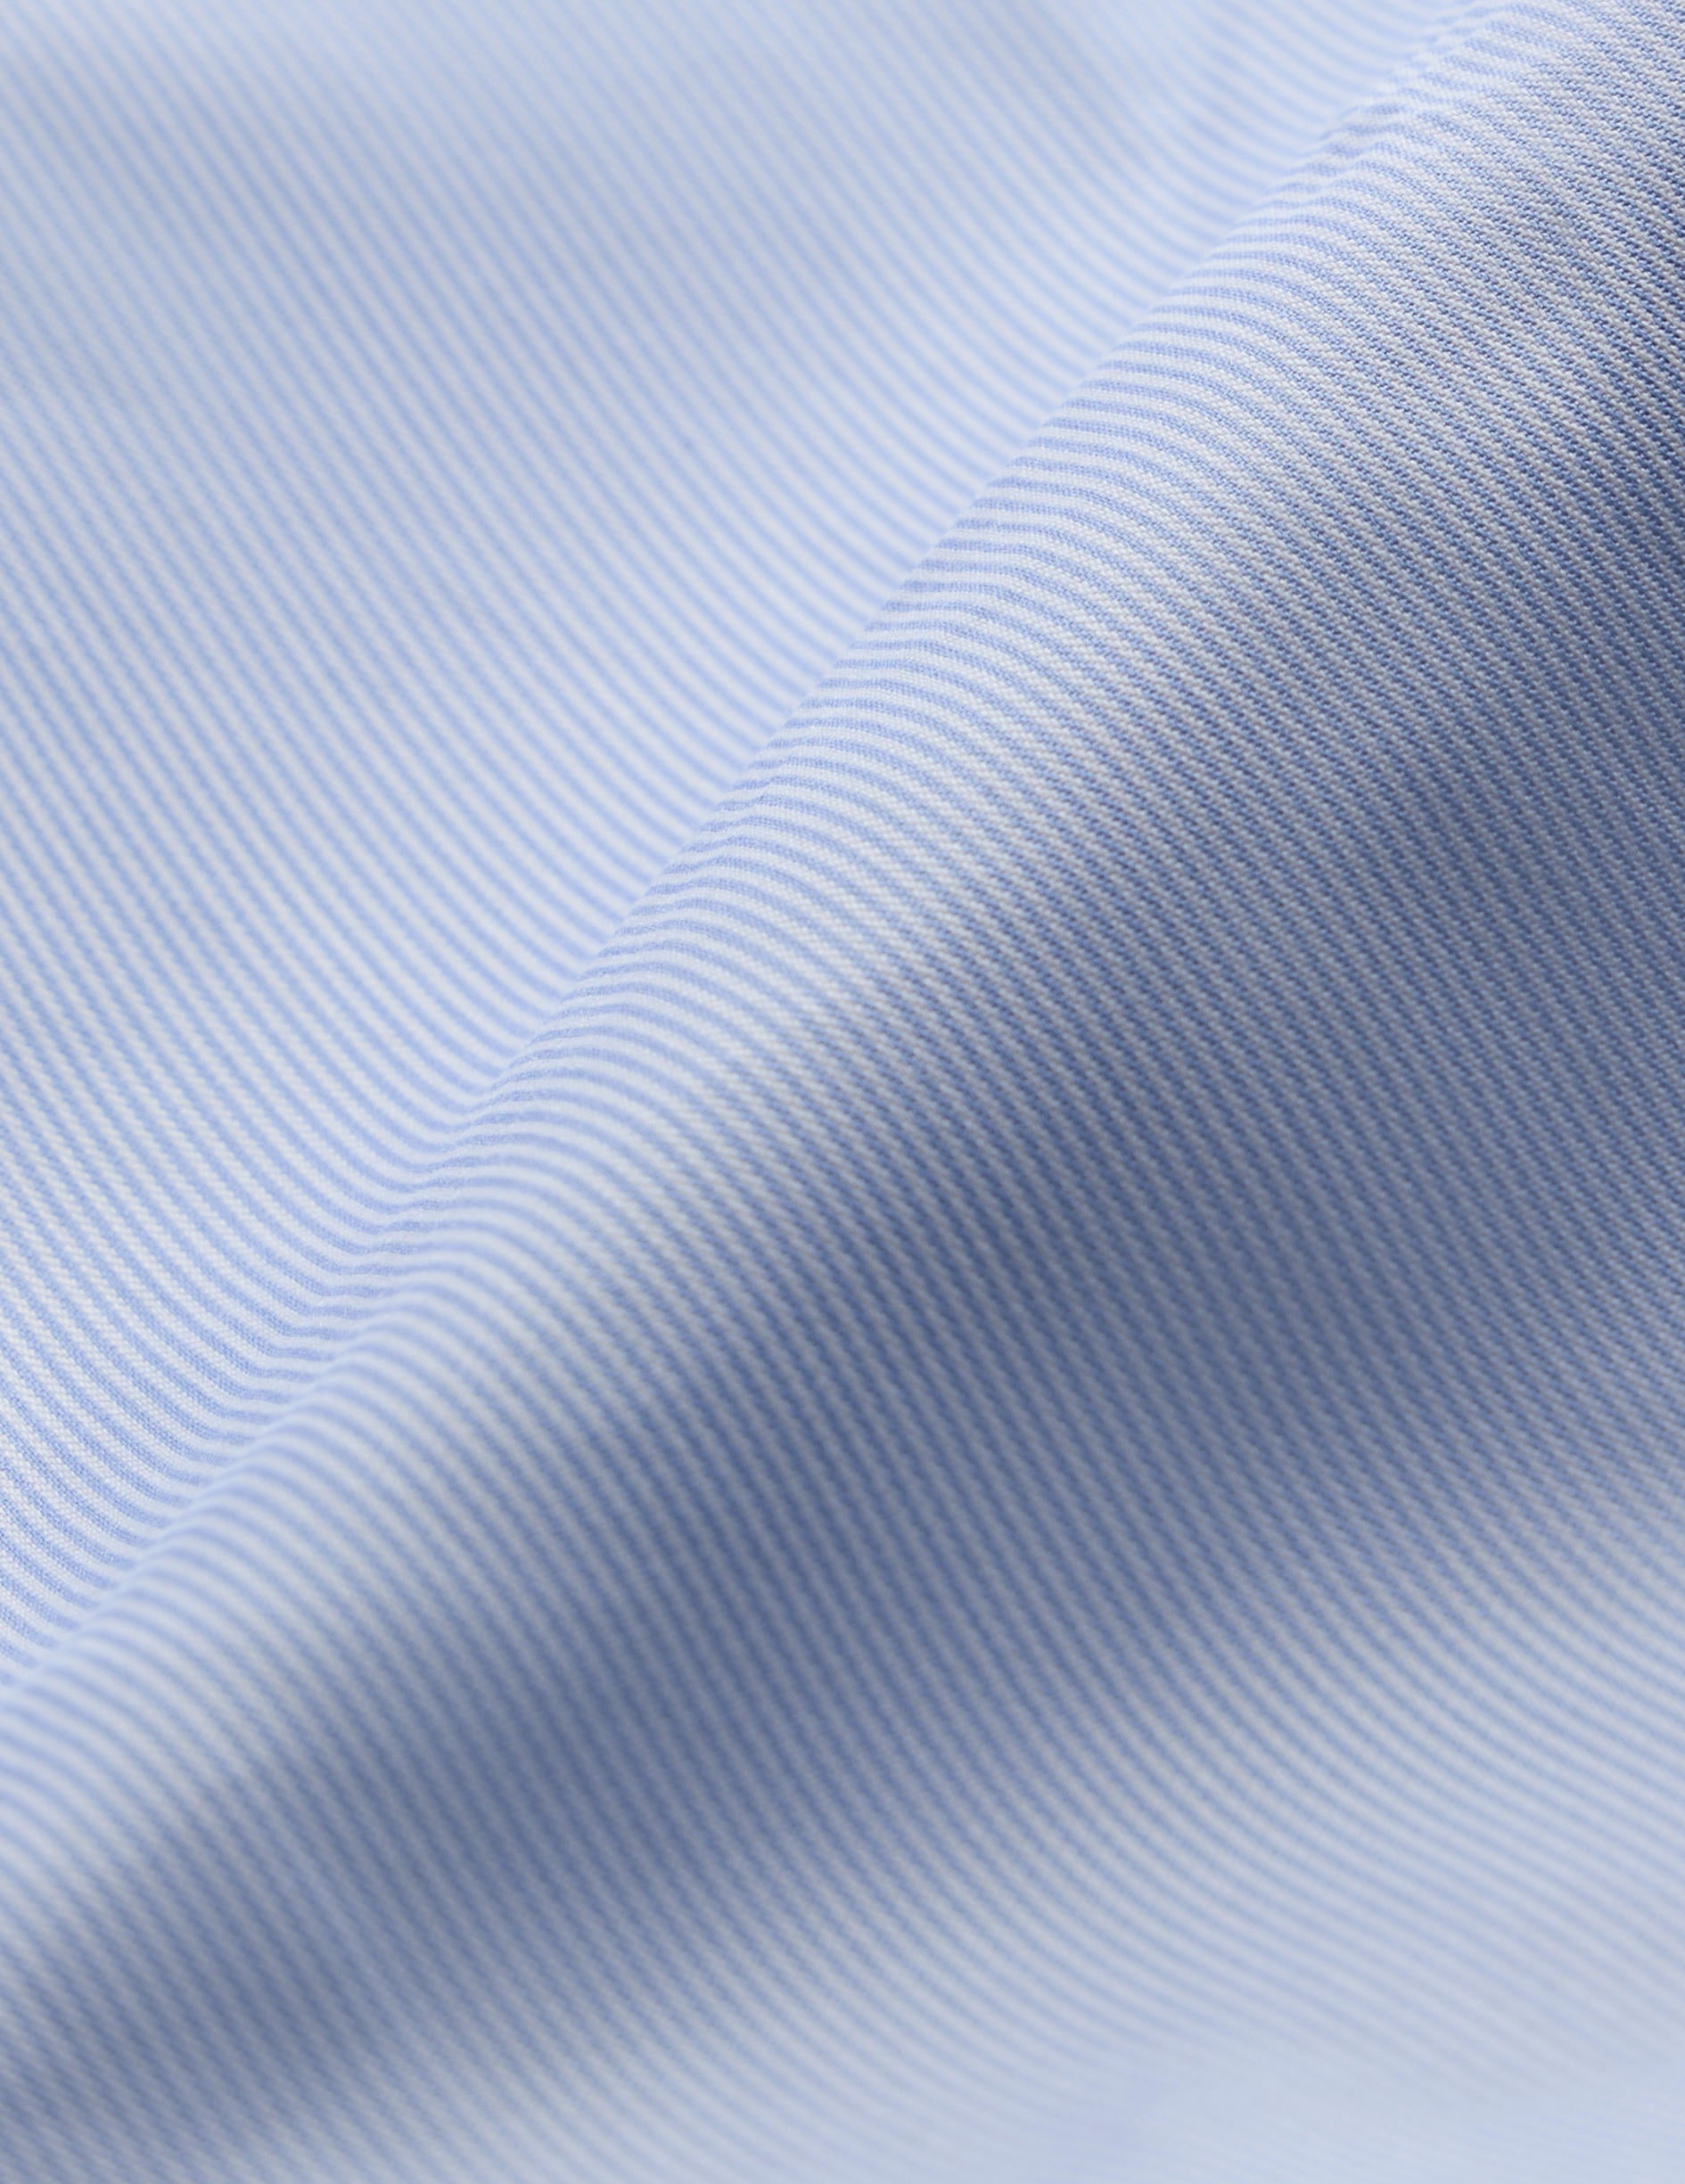 Chemise semi-ajustée infroissable rayée bleu clair - Twill - Col Figaret